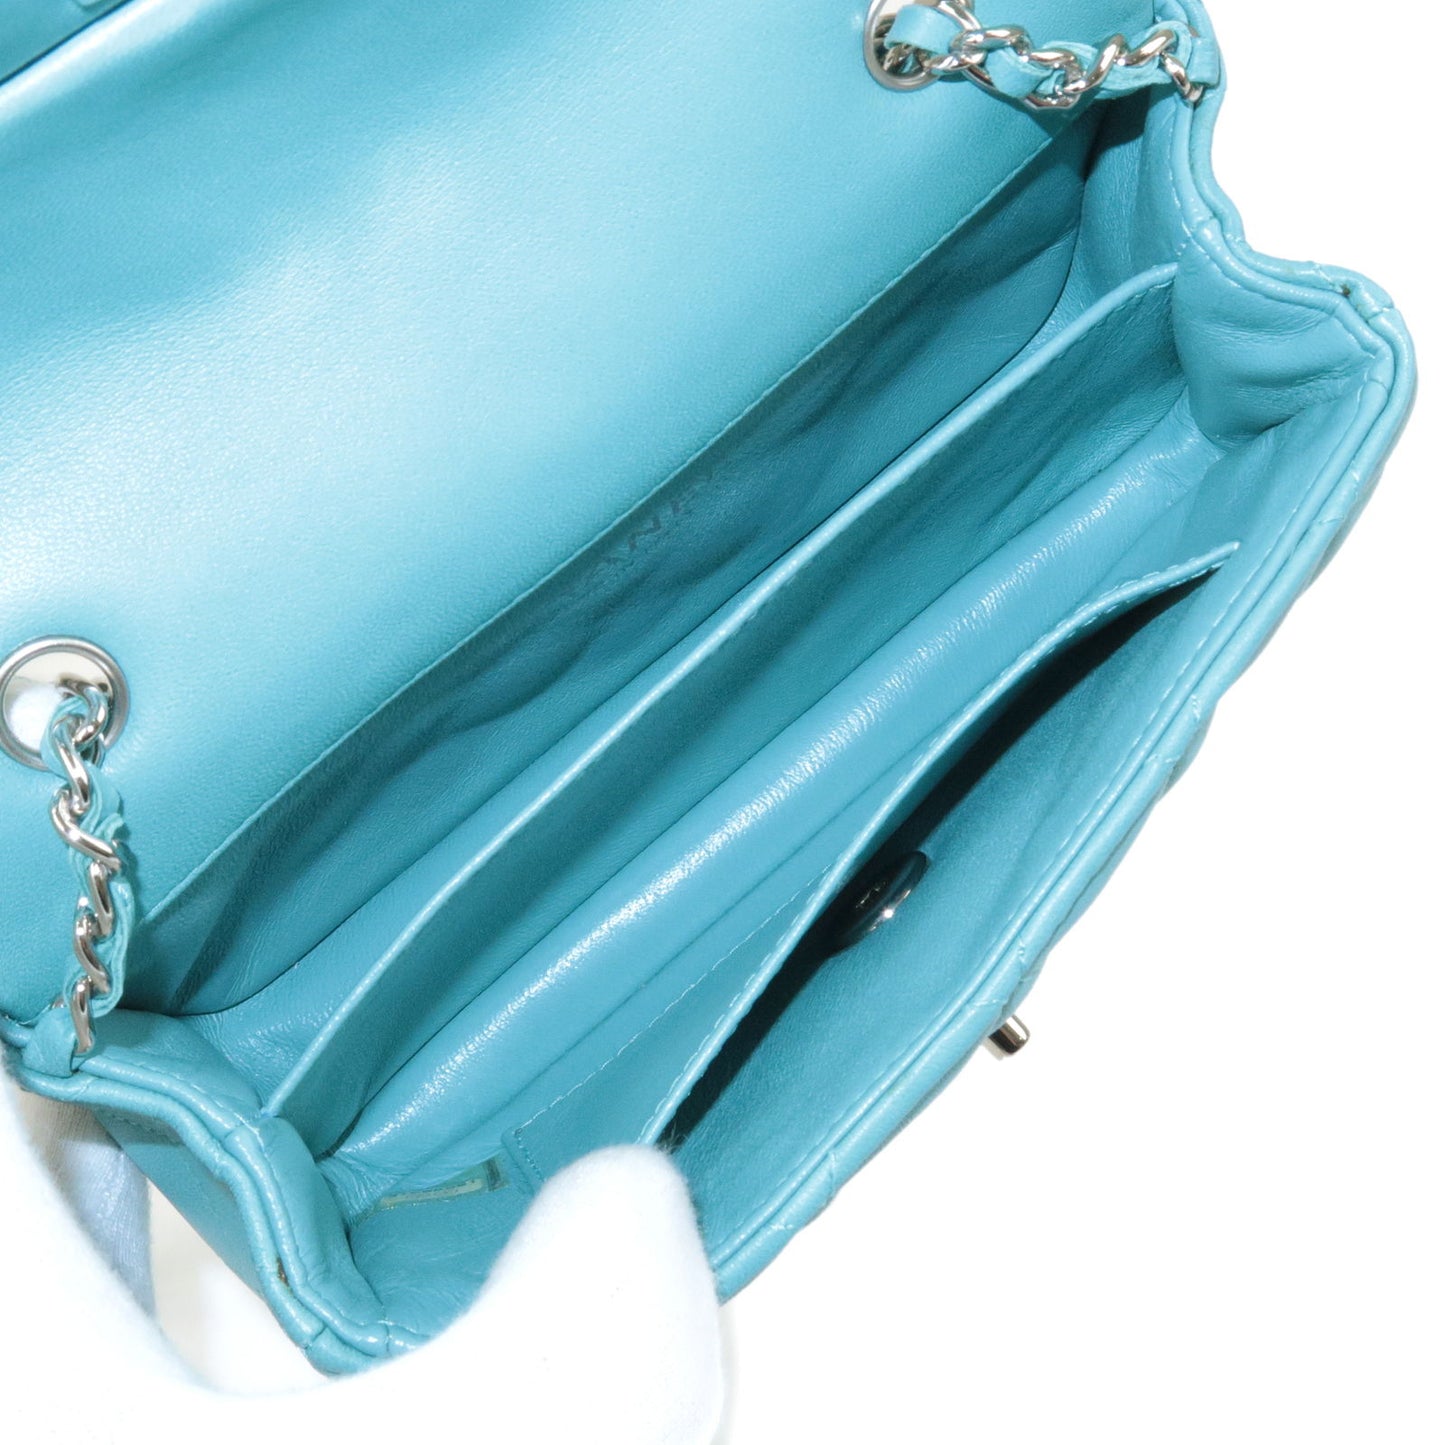 CHANEL Matelasse Lamb Skin Mini Chain Shoulder Bag Turquoise Blue